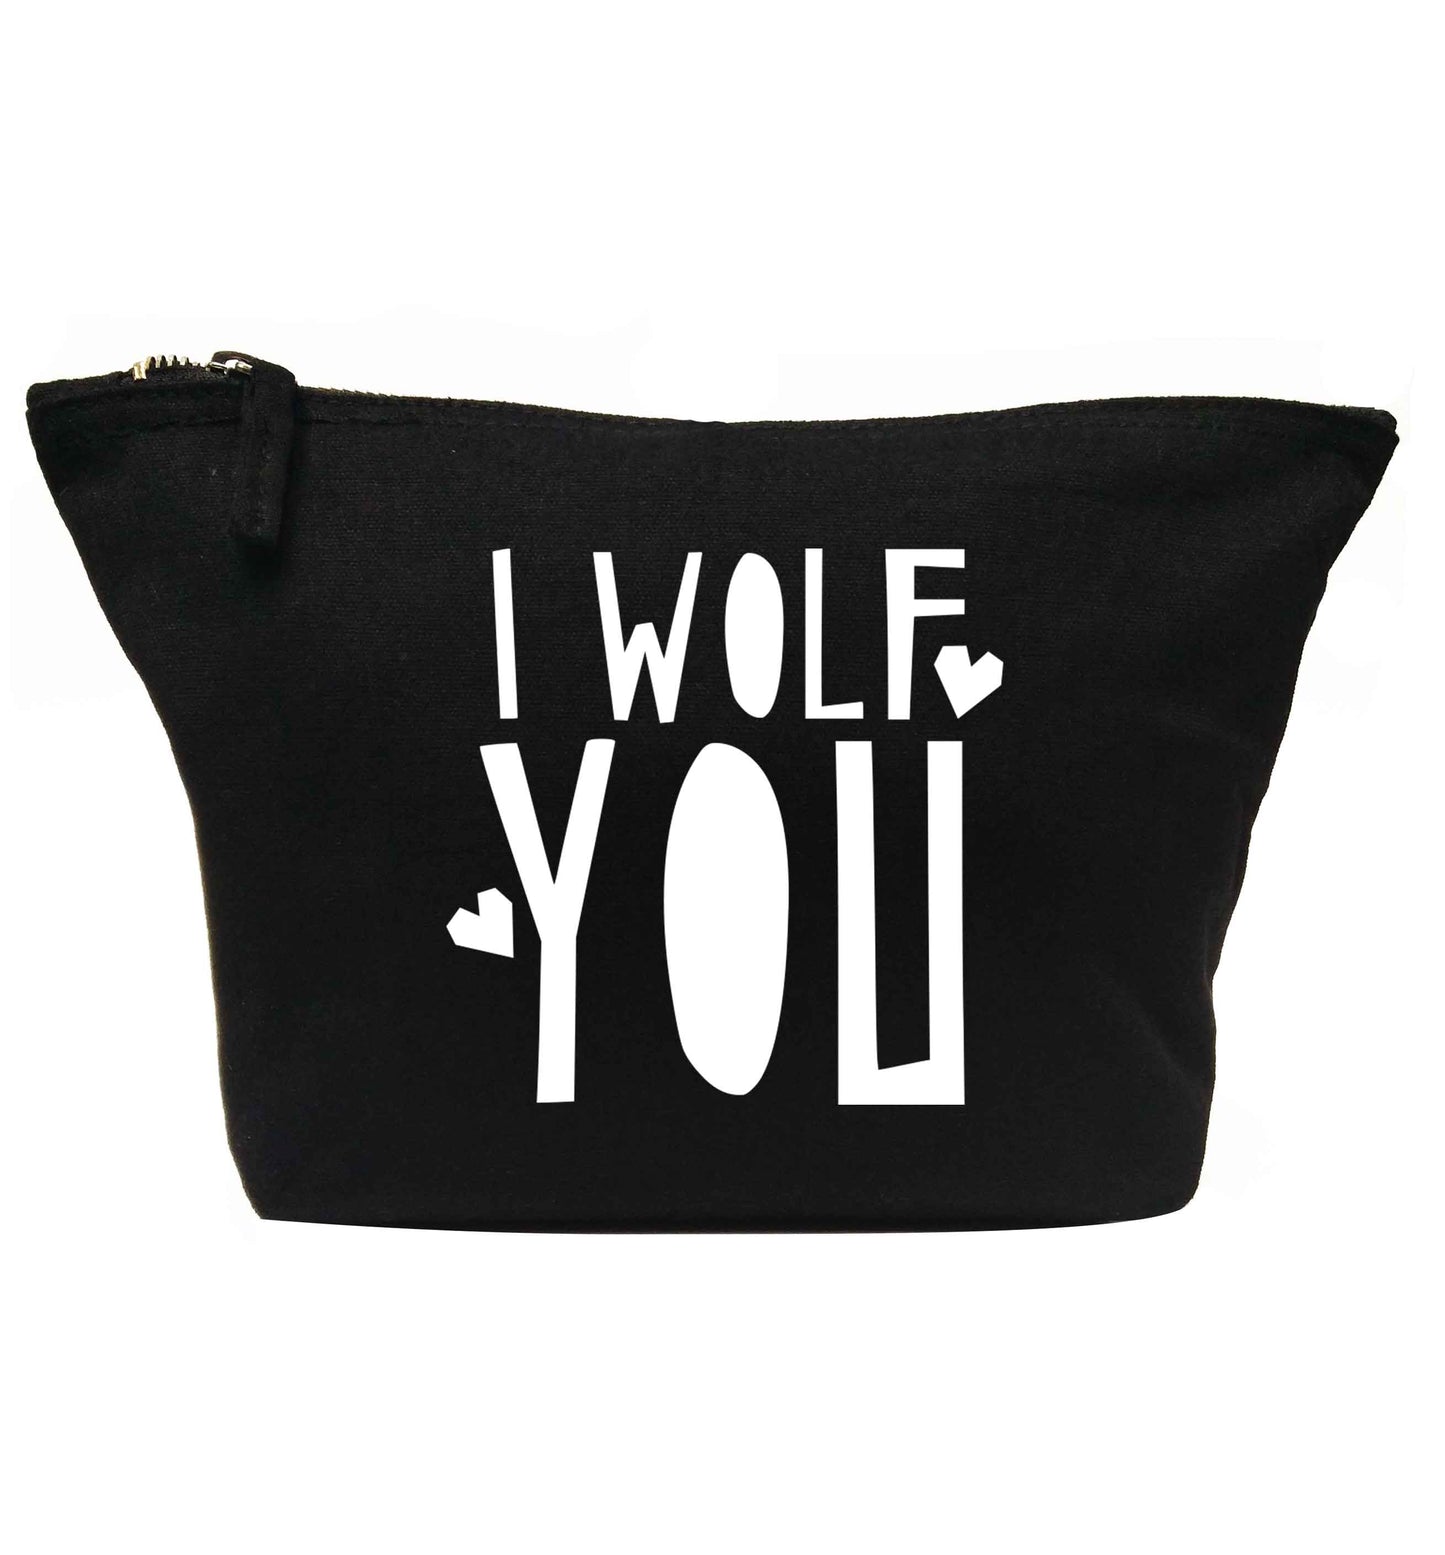 I wolf you | Makeup / wash bag